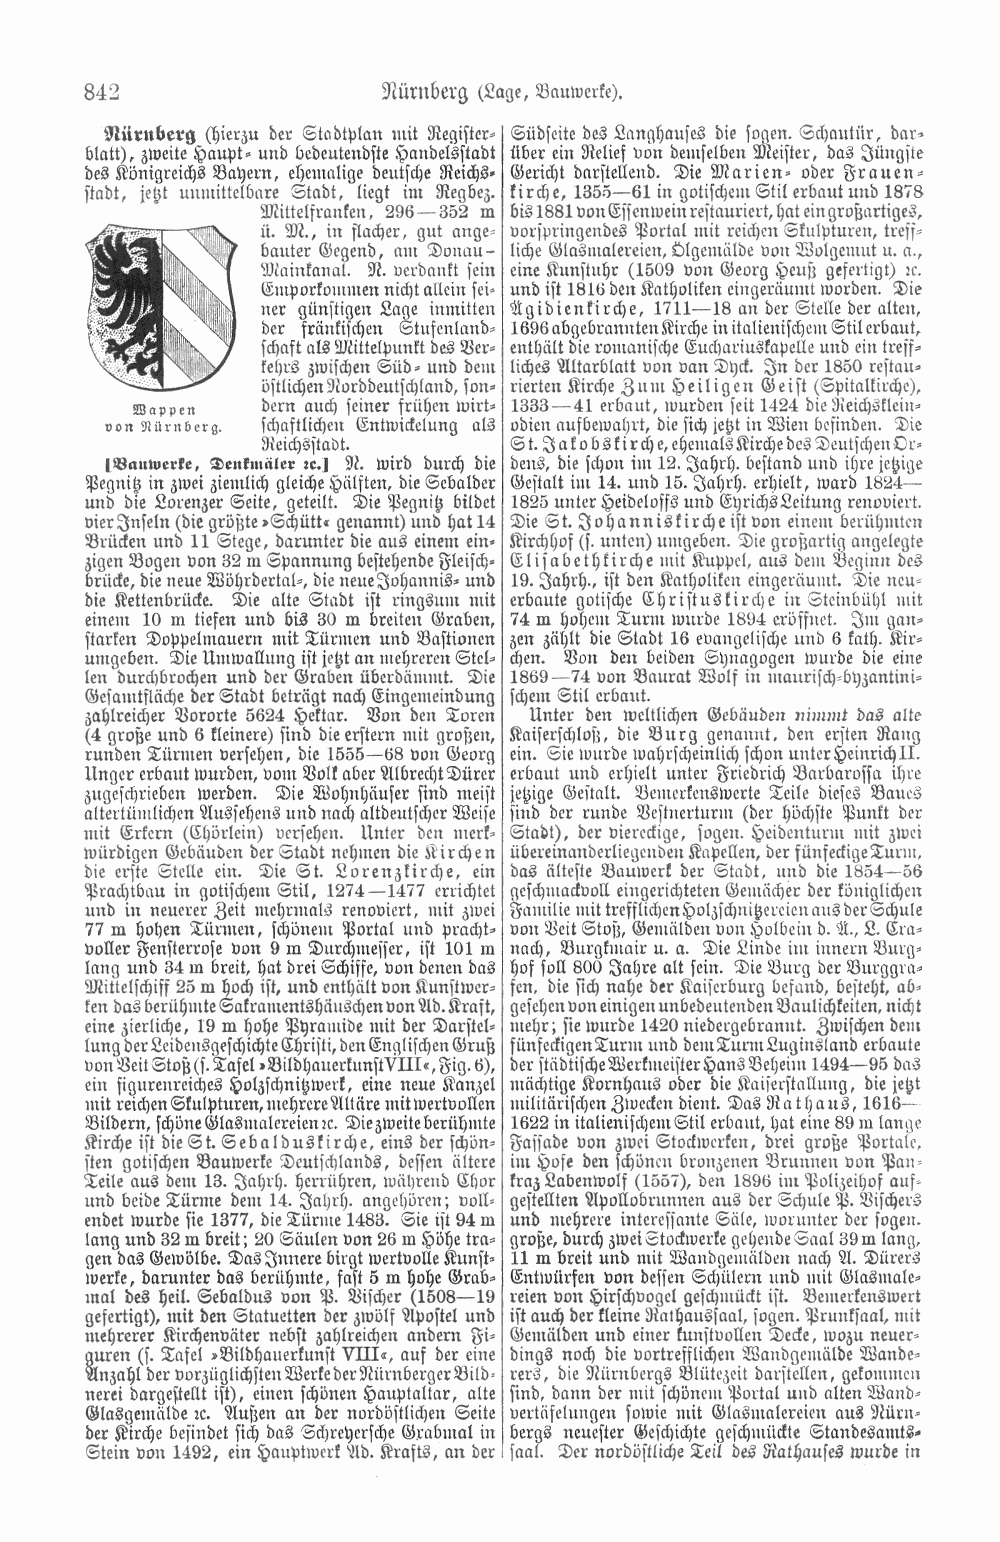 Meyers Groes Konversations-Lexikon, Band 14. Leipzig 1908 S. 842